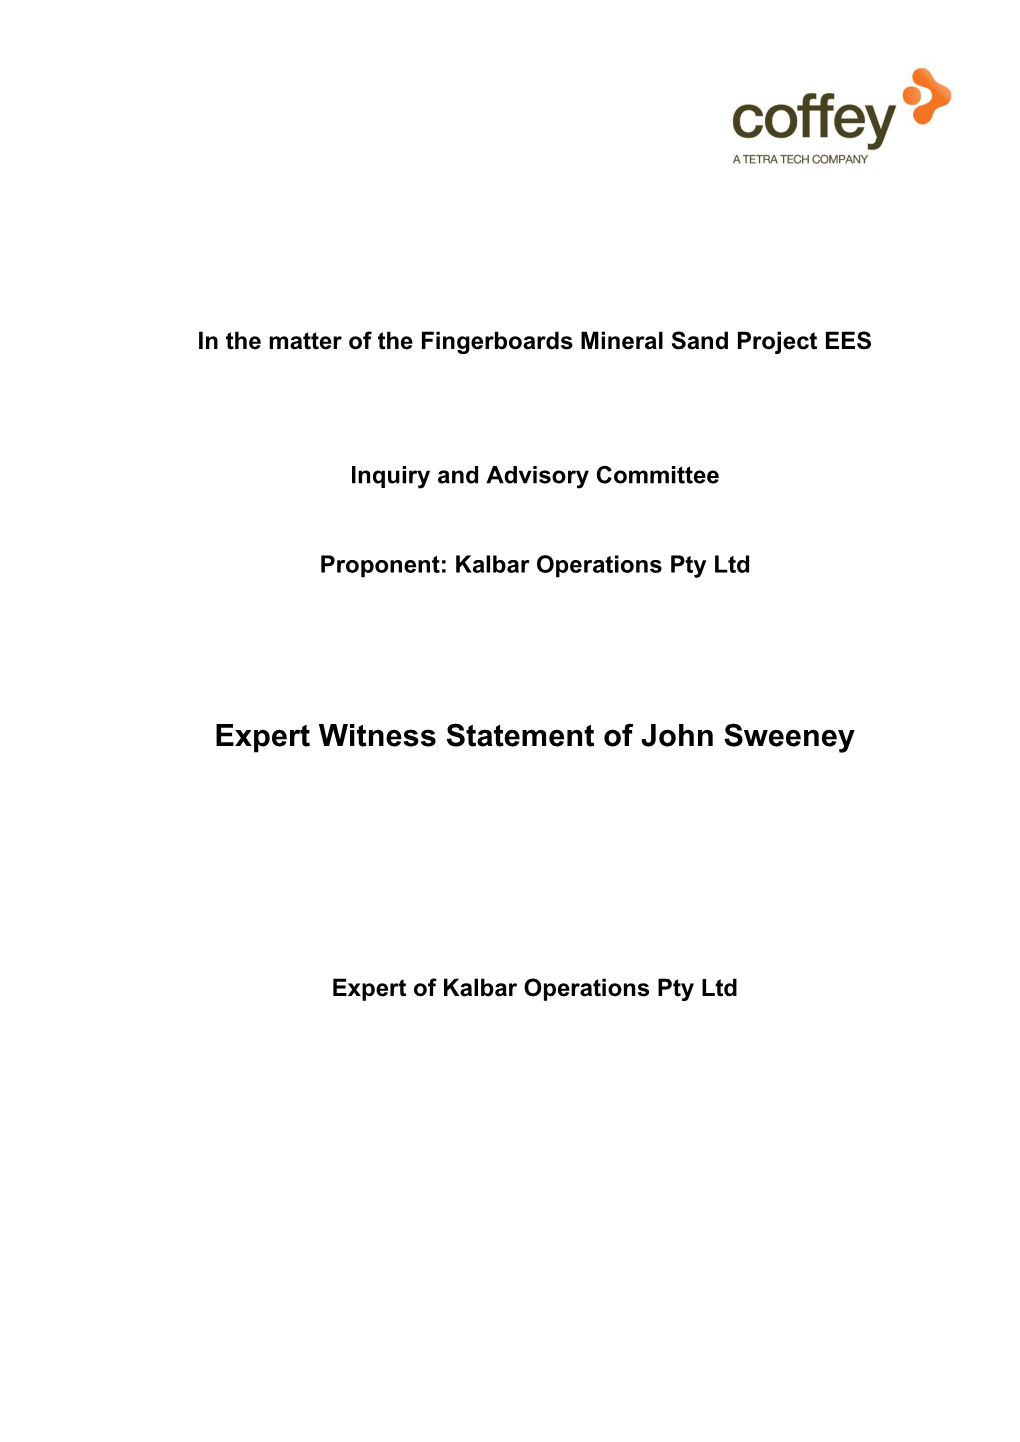 Expert Witness Statement of John Sweeney